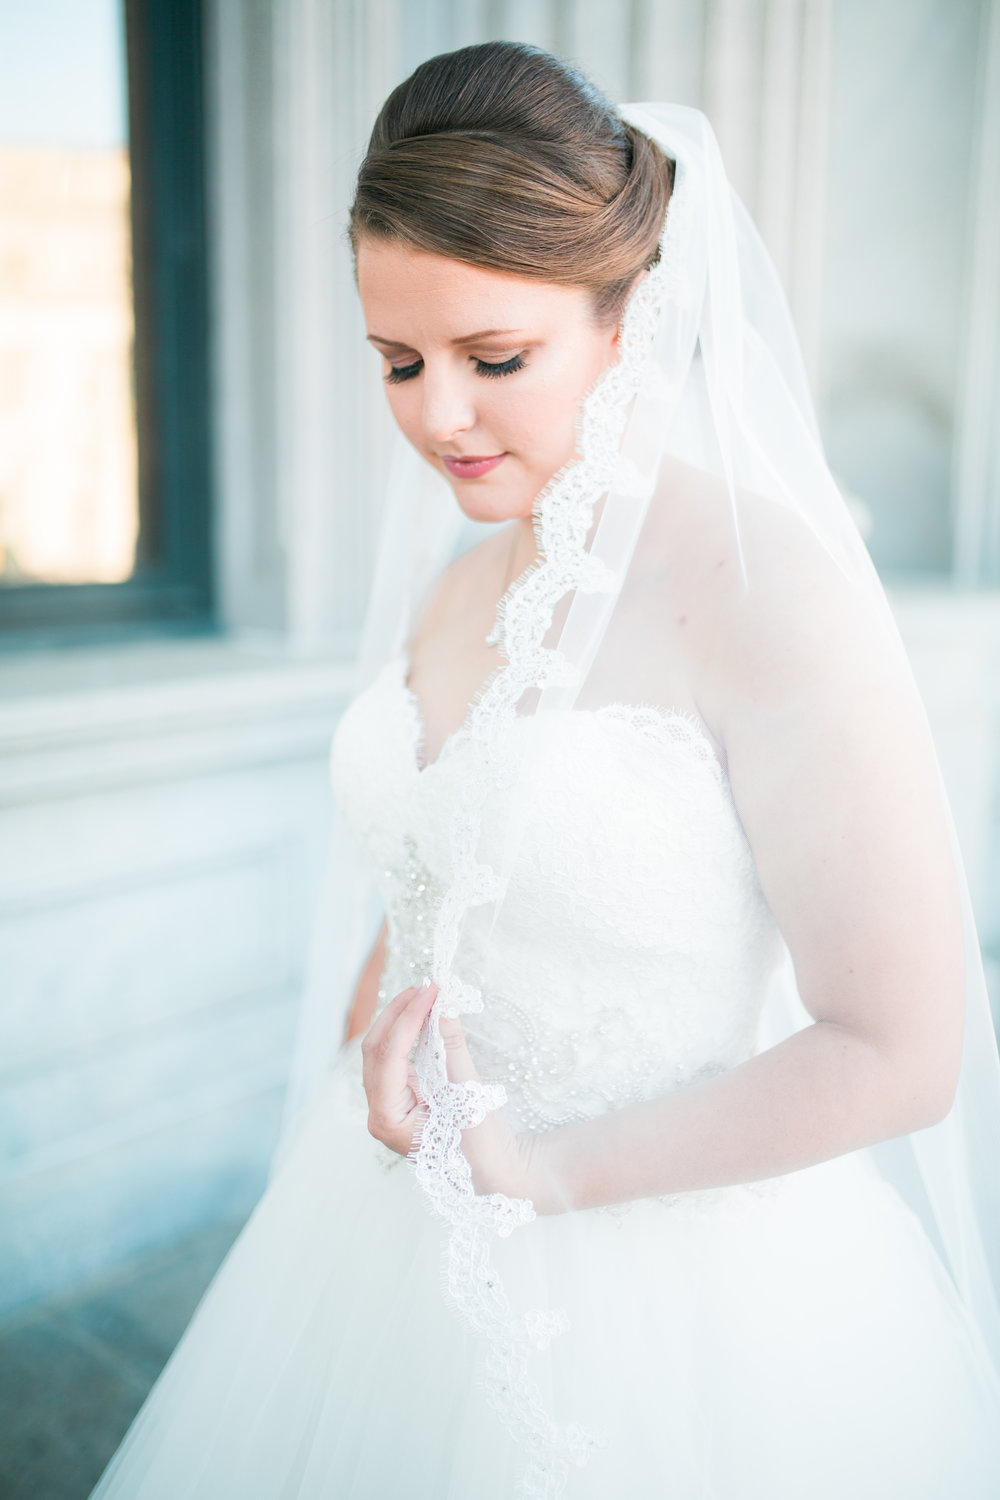 Bride looking at dress during Photo Shoot.